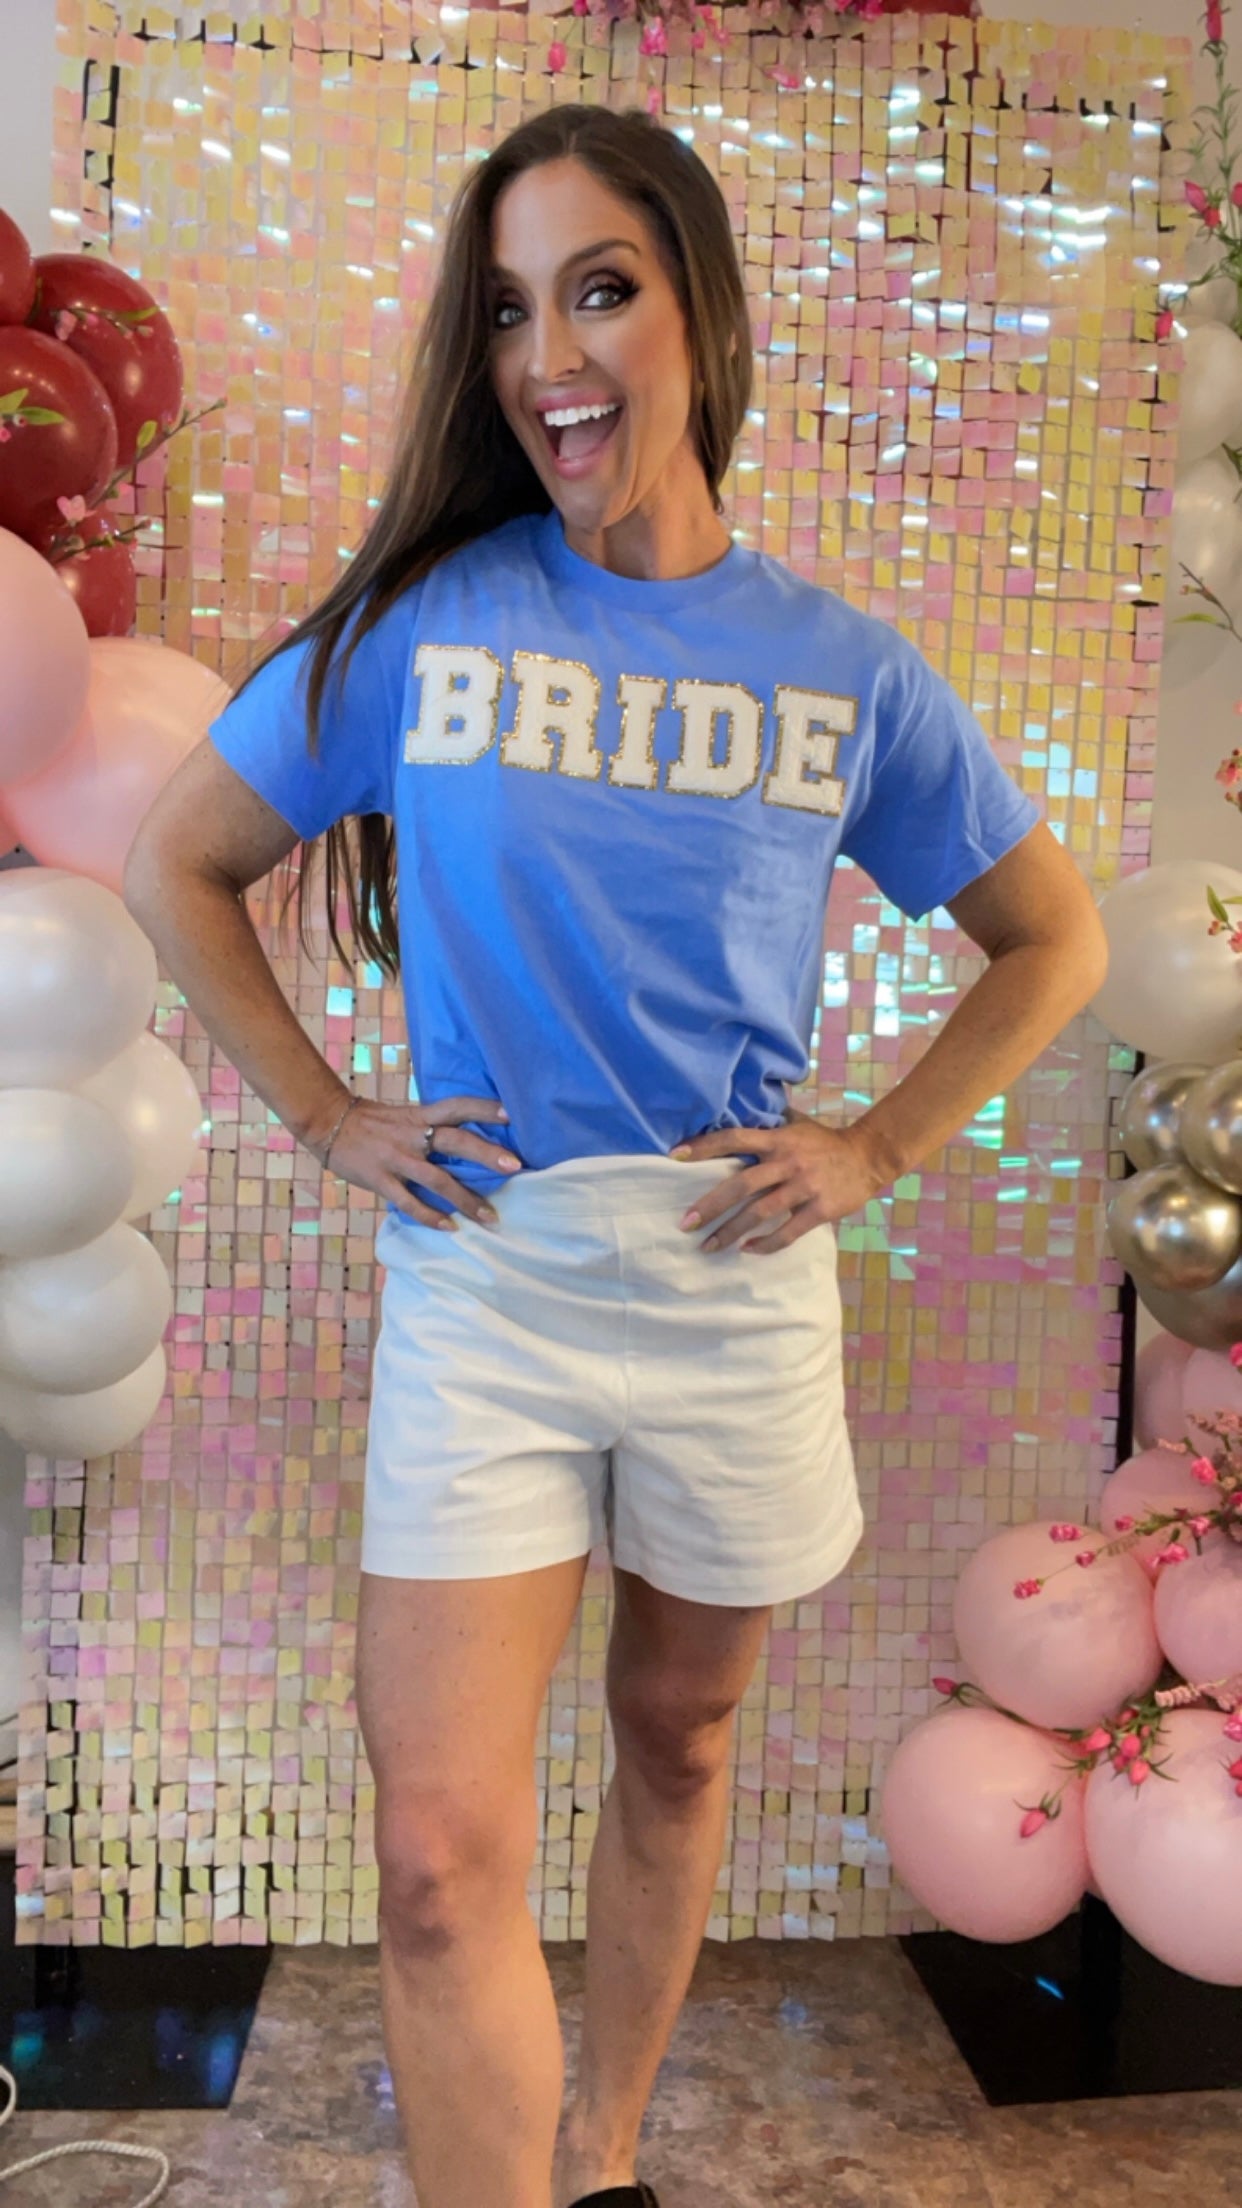 Bride Gold Glitter Towel Lettering Top